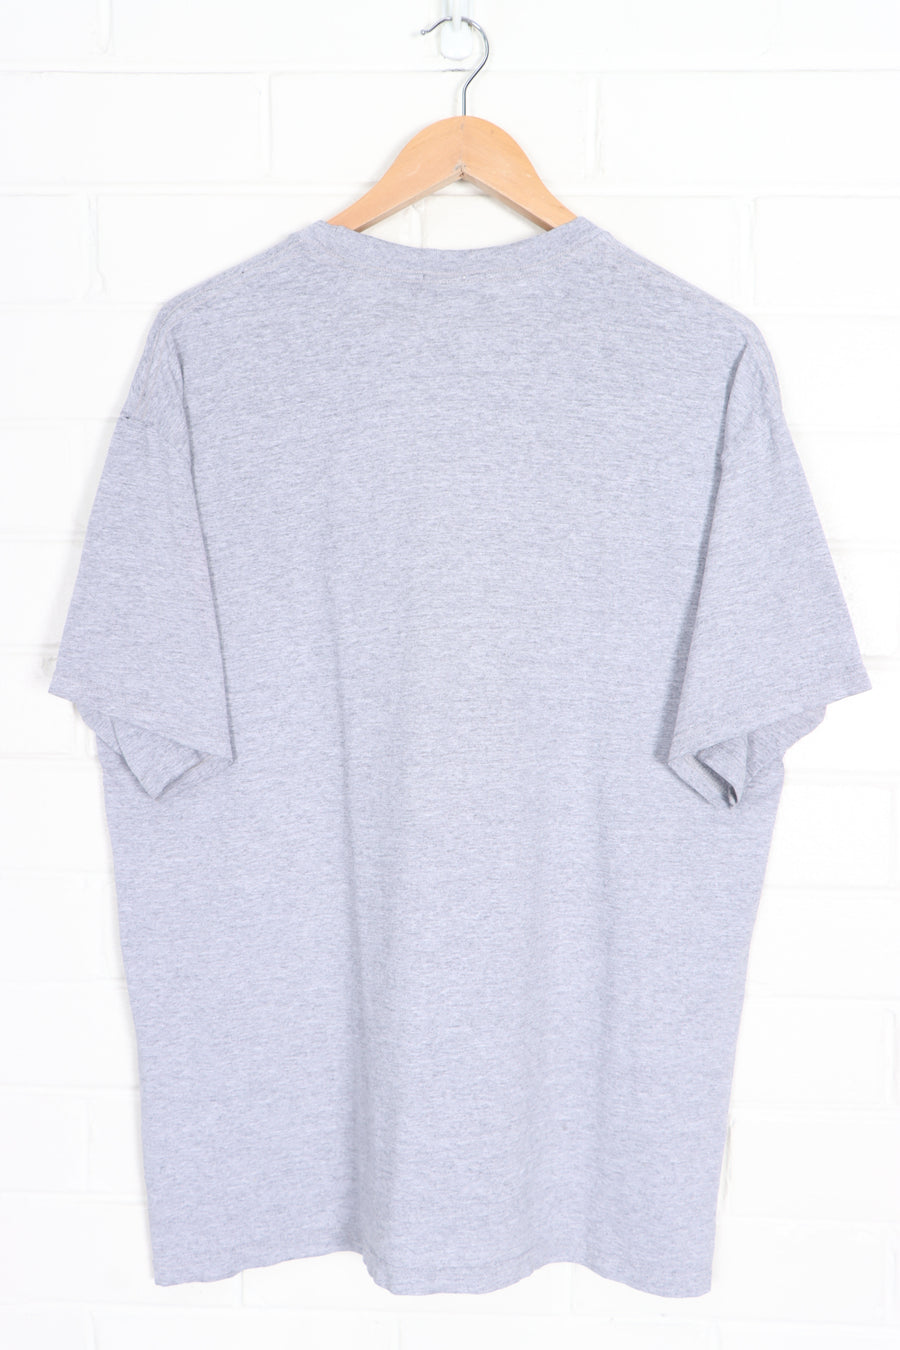 NIKE Embroidered Swoosh Logo Grey T-Shirt (L)